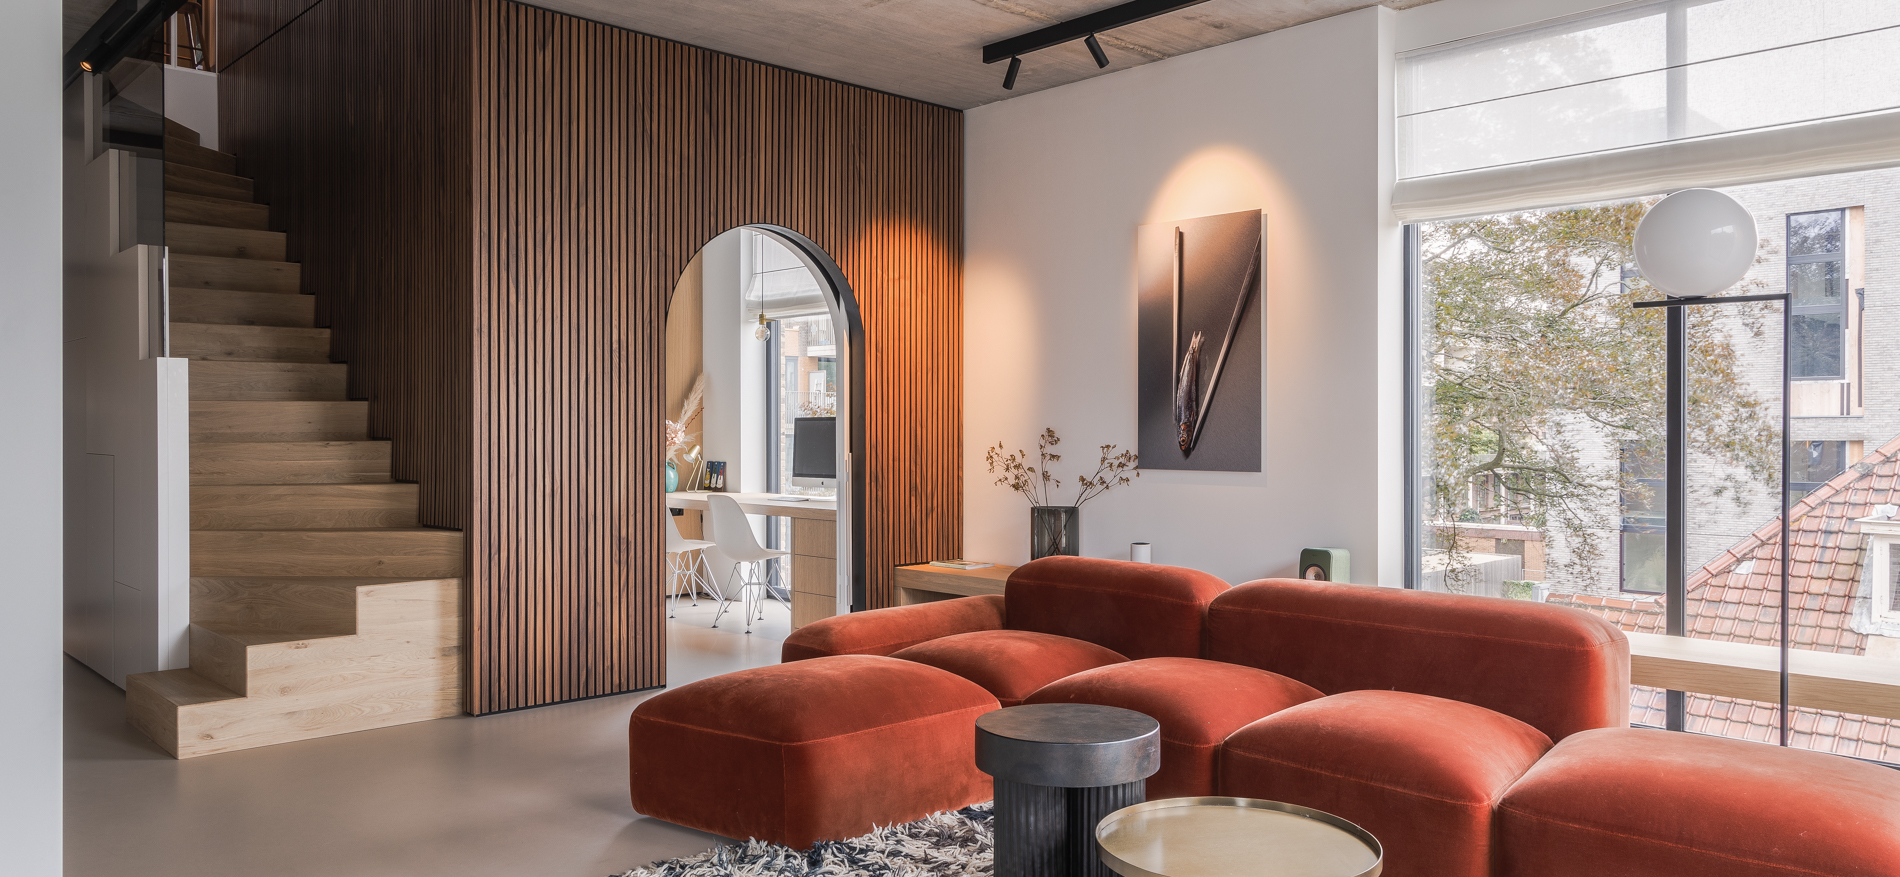 Residential house furnishing | Amsterdam (NL)